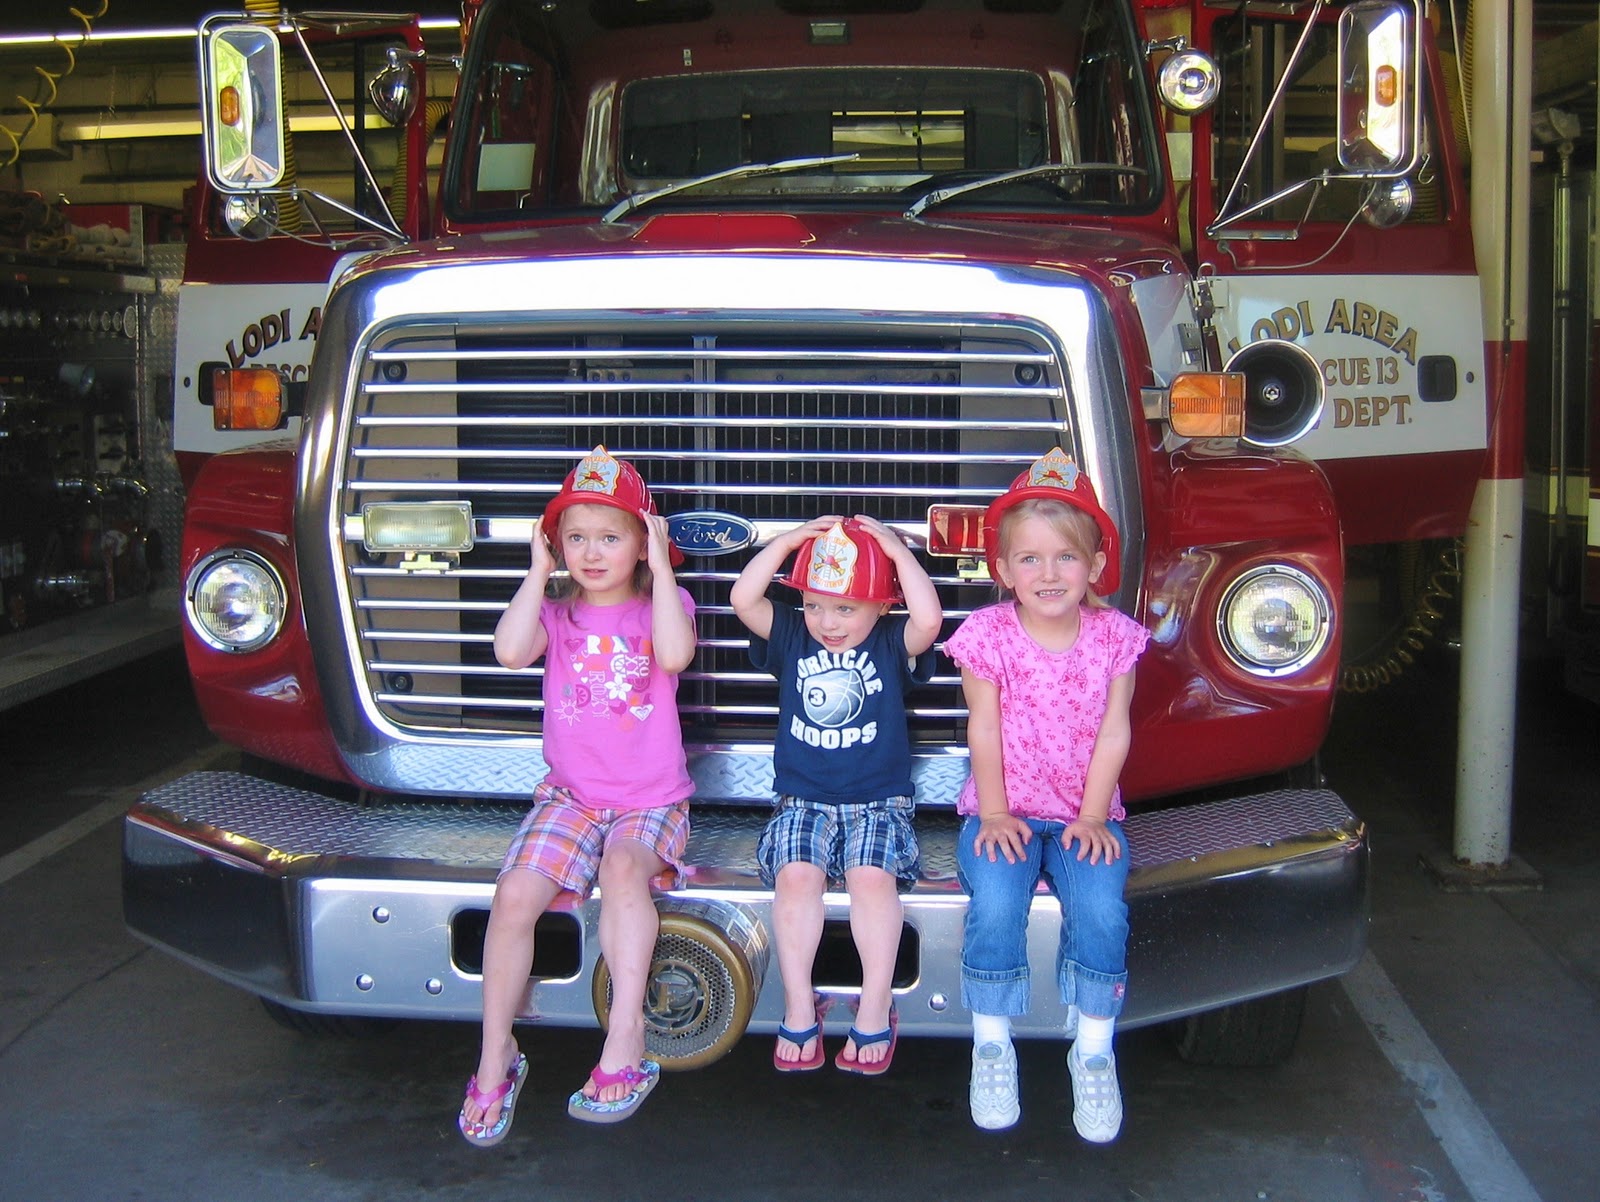 http://4.bp.blogspot.com/-f6ja3dejfZY/ToR67_zJA2I/AAAAAAAAAOA/h0d89r8NoCY/s1600/kids+on+firetruck.jpg